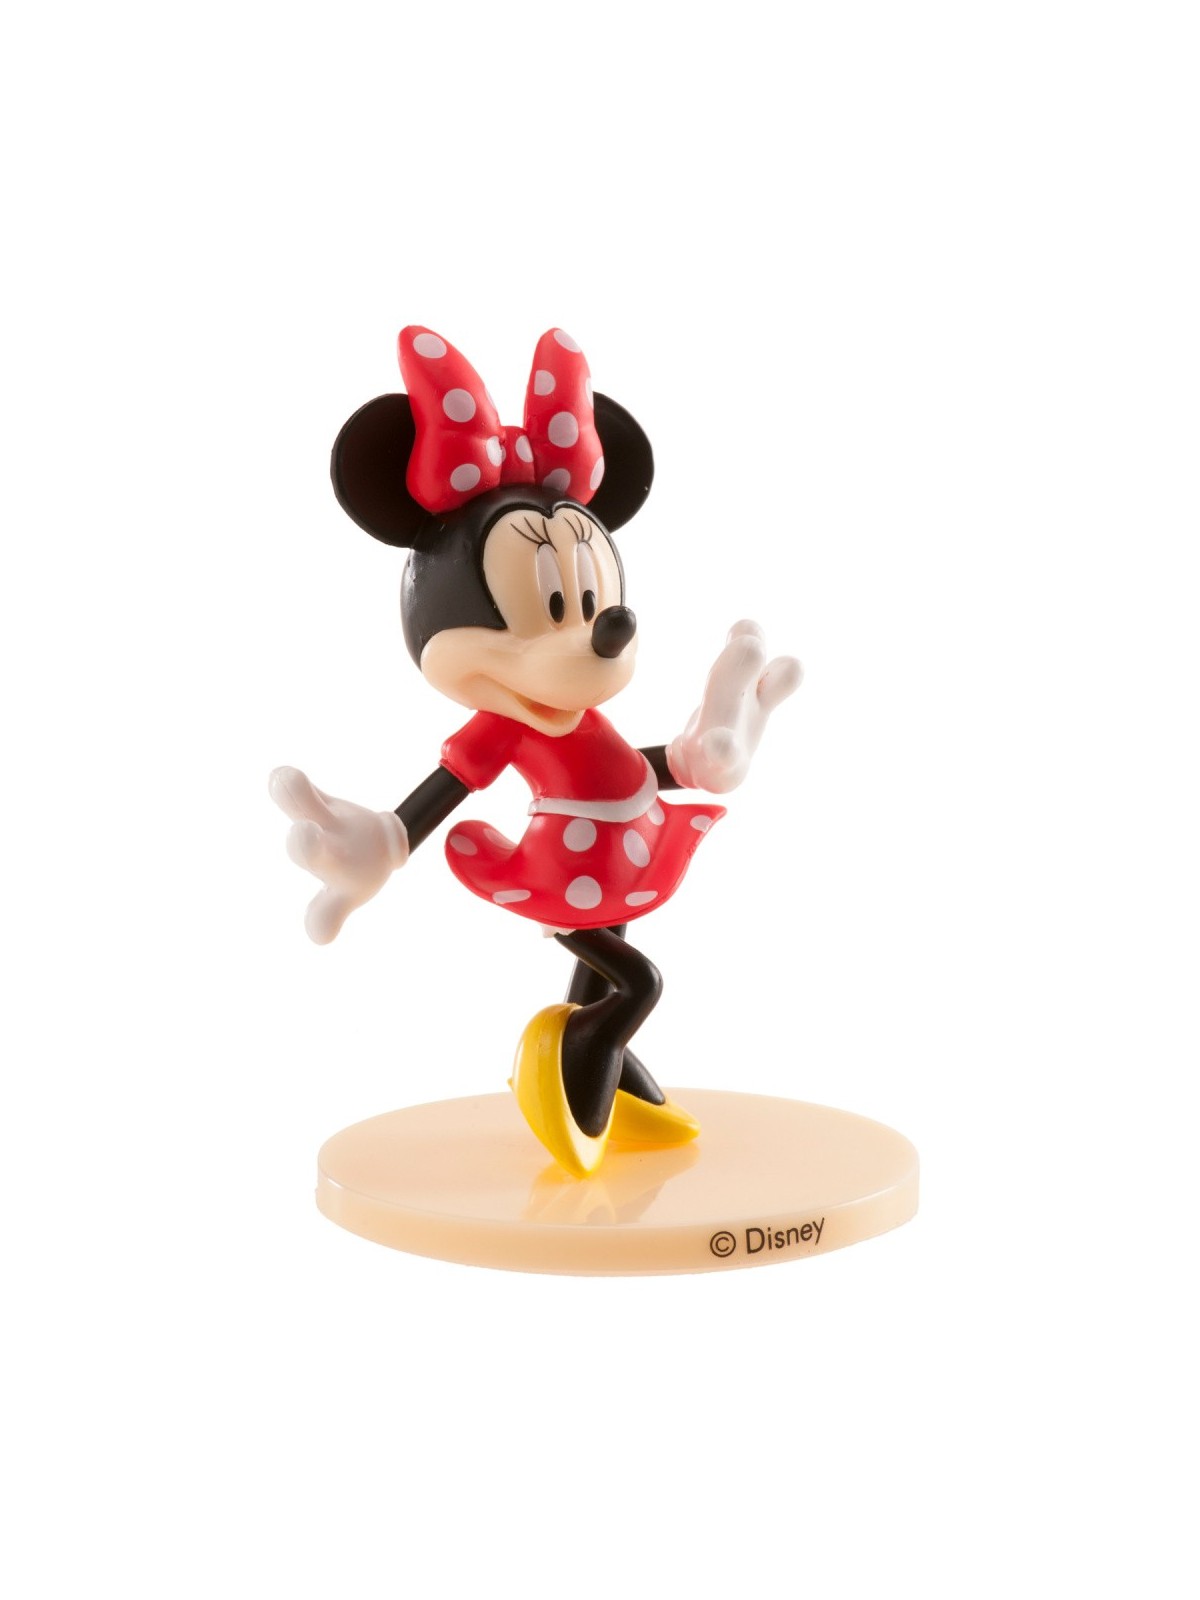 Dekorační figurka - Minnie  - 7,5cm